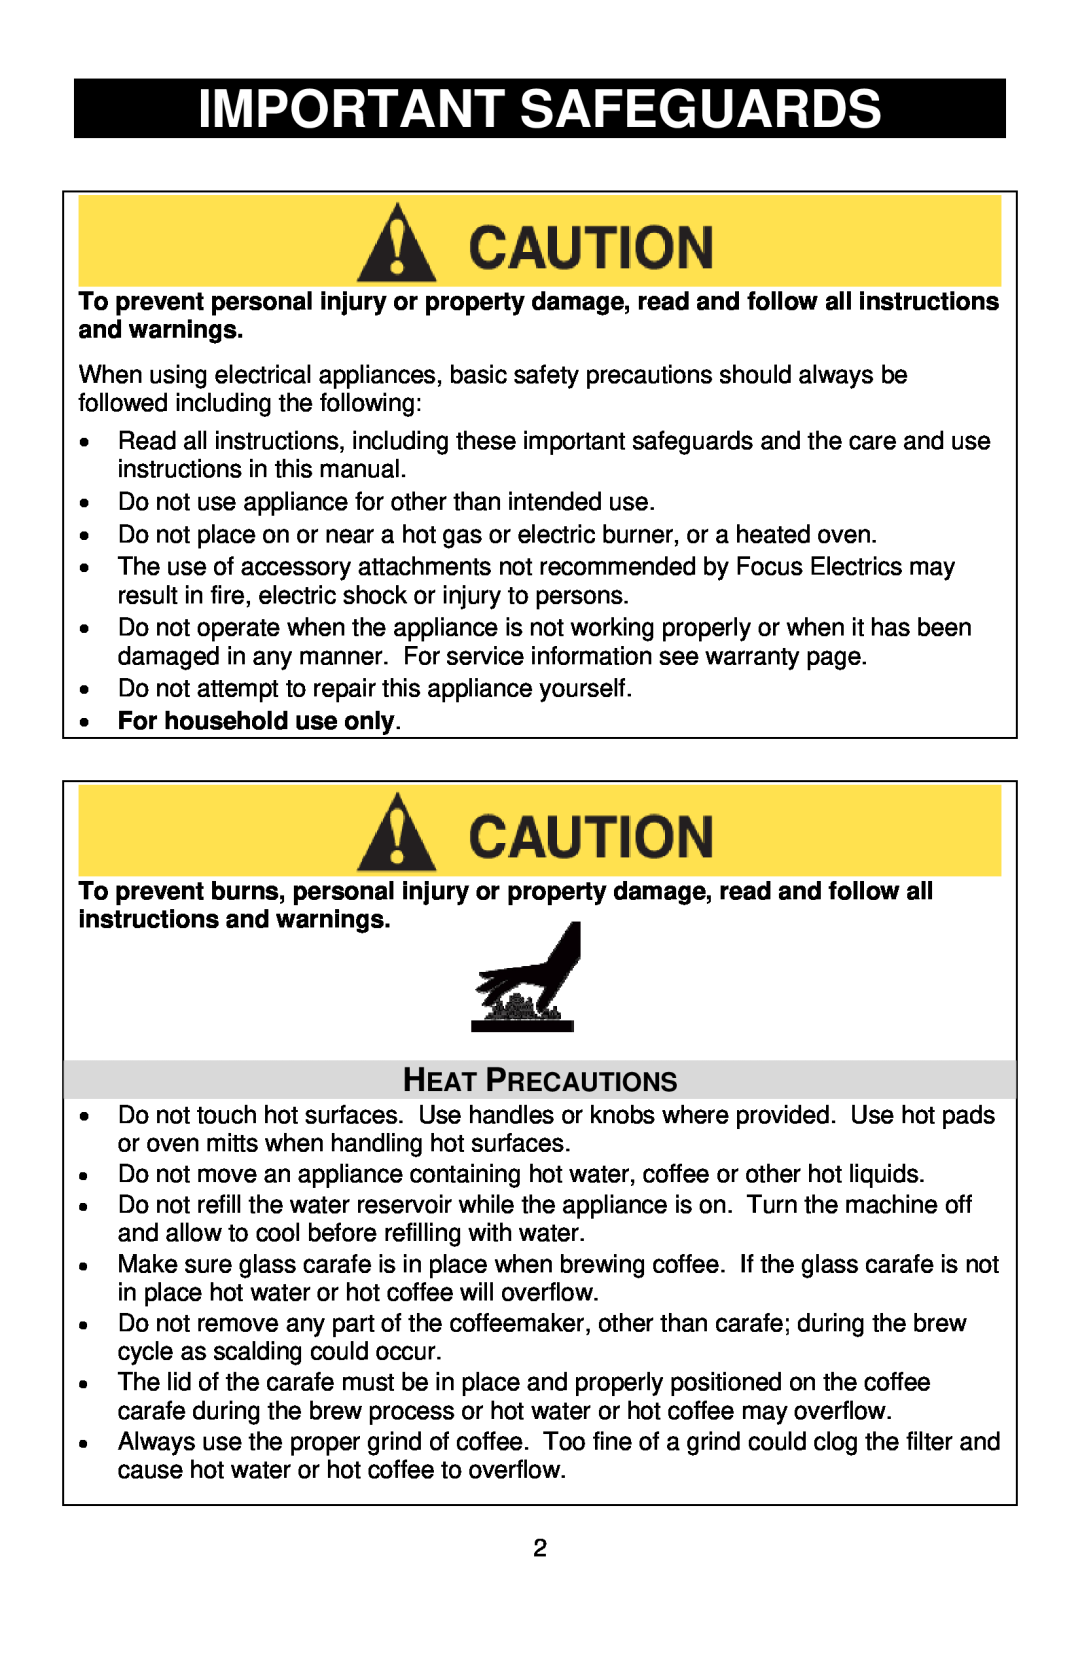 West Bend Auto-off Coffeemaker instruction manual Important Safeguards, Heat Precautions 